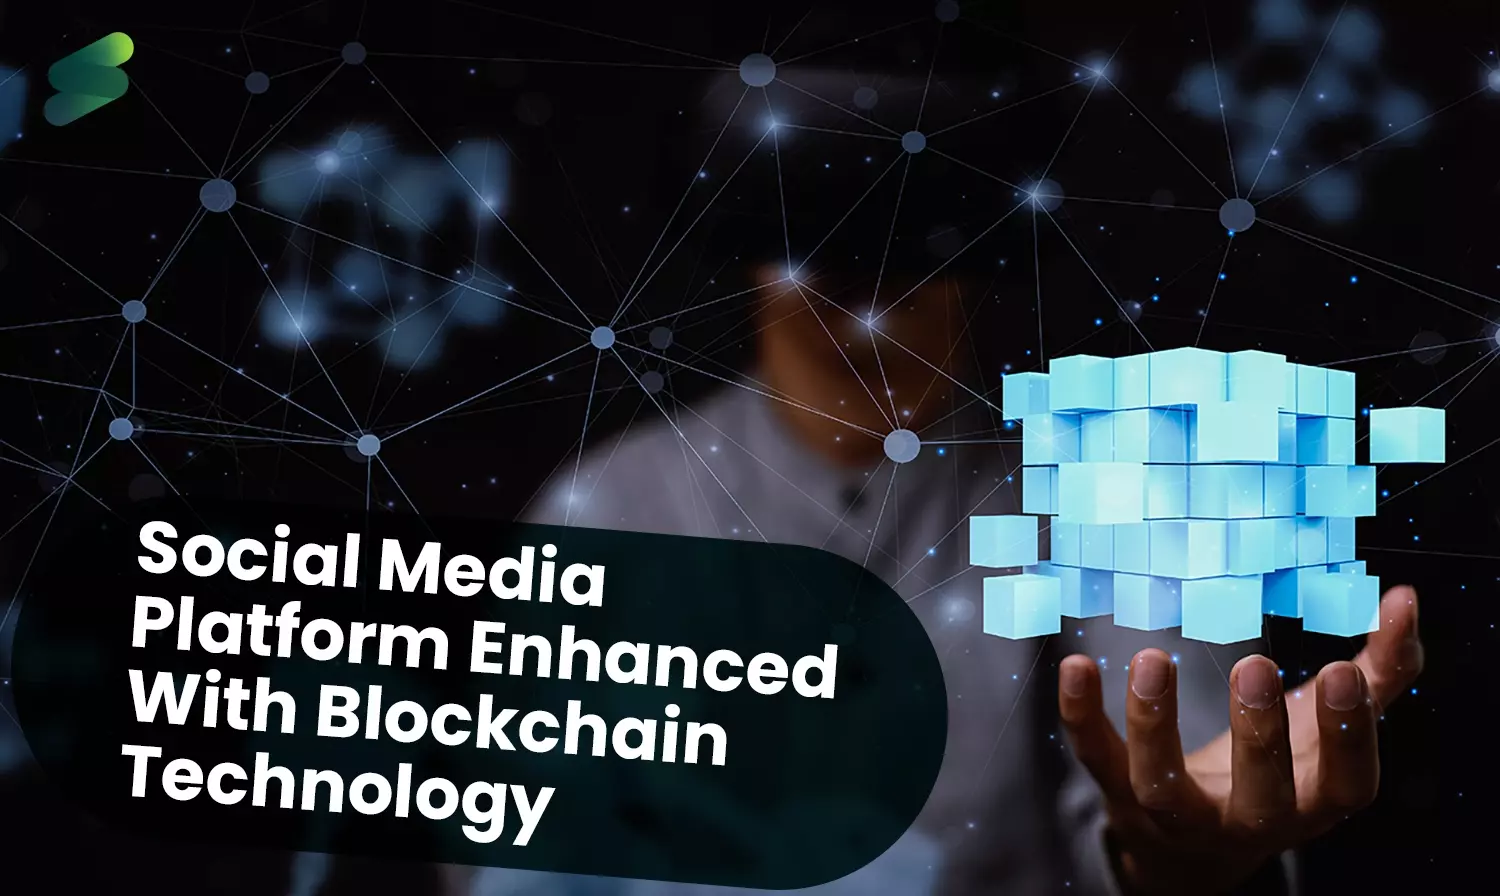 Use of Blockchain Technology in Social Media